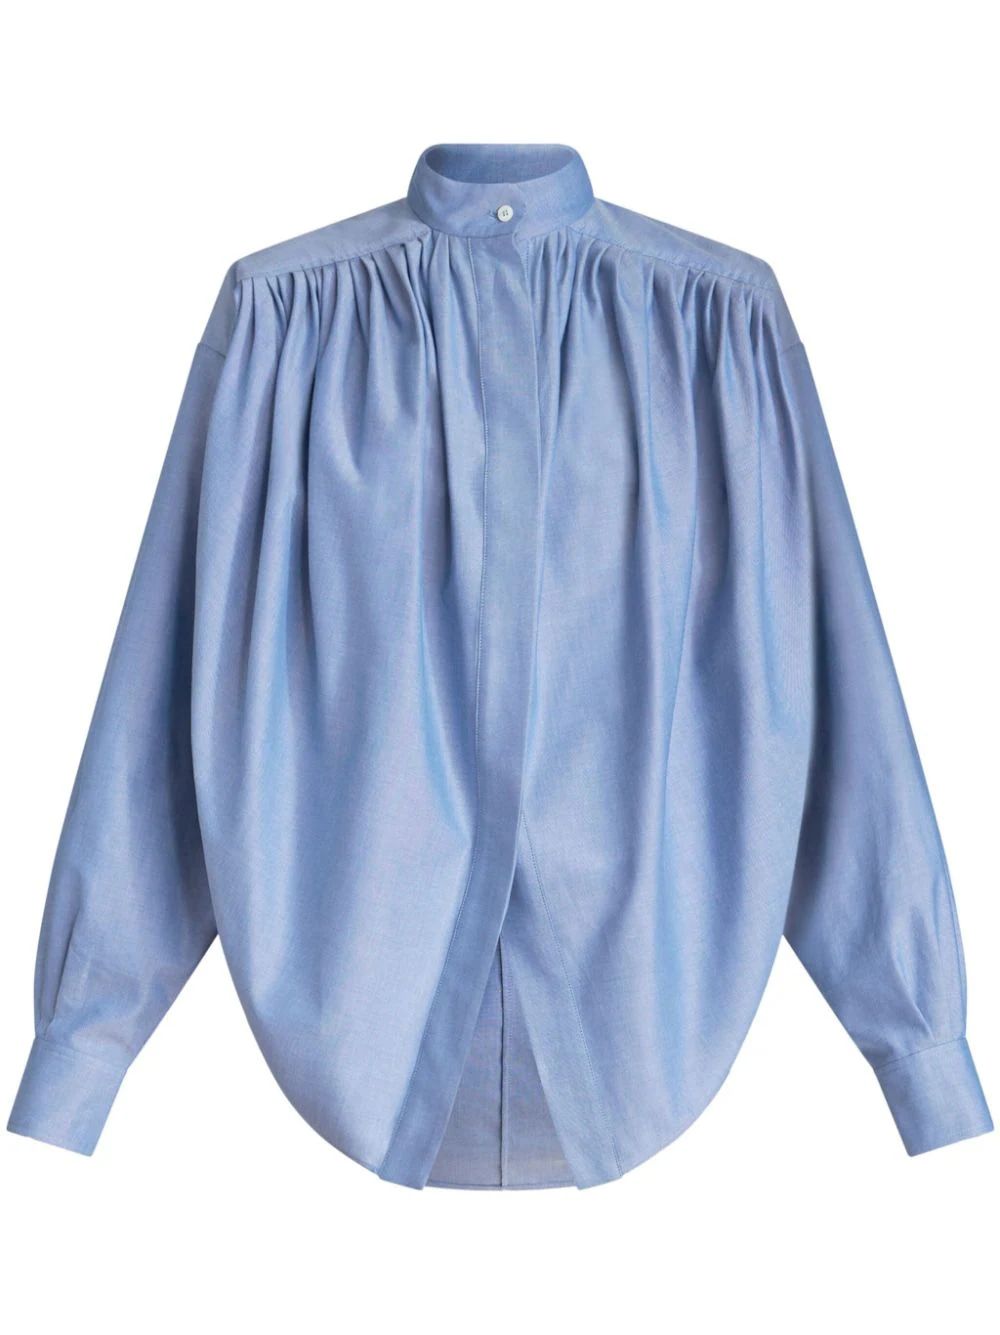 Shop Etro Light Blue Oxford Cotton Shirt For Women Featuring Flattering Egg-shaped Cut And Mandarin Collar